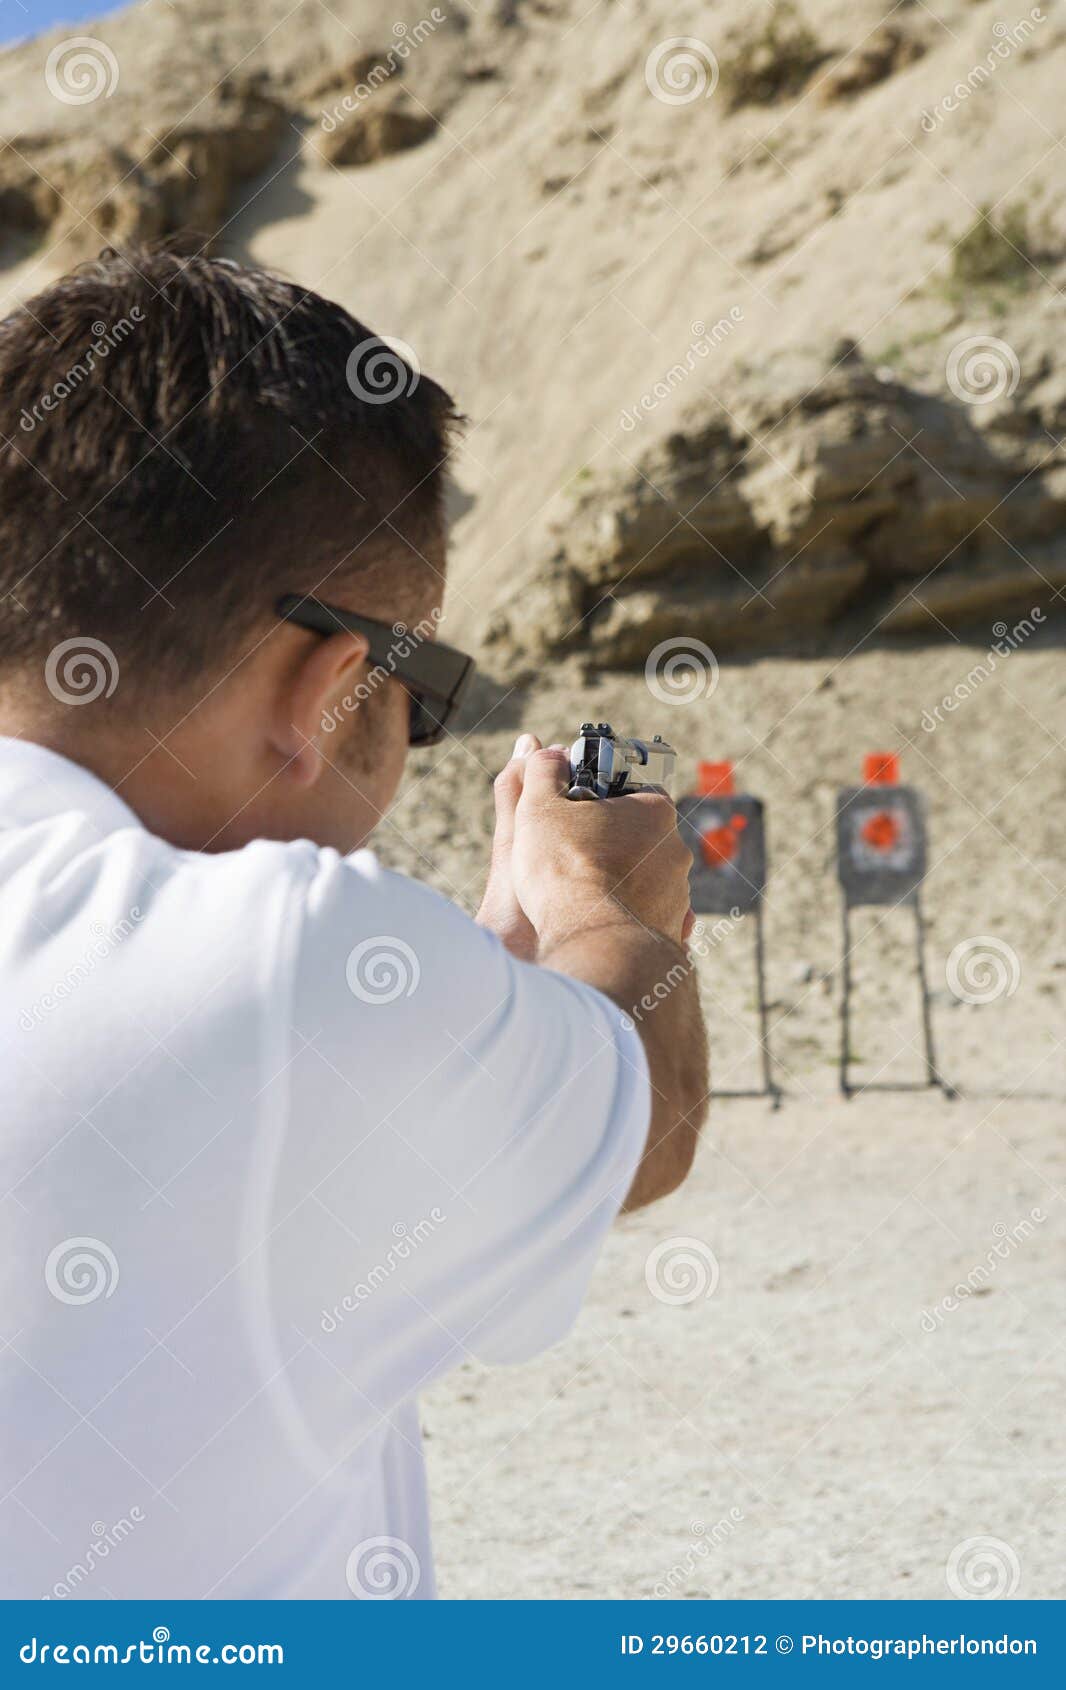 man aiming hand gun at firing range